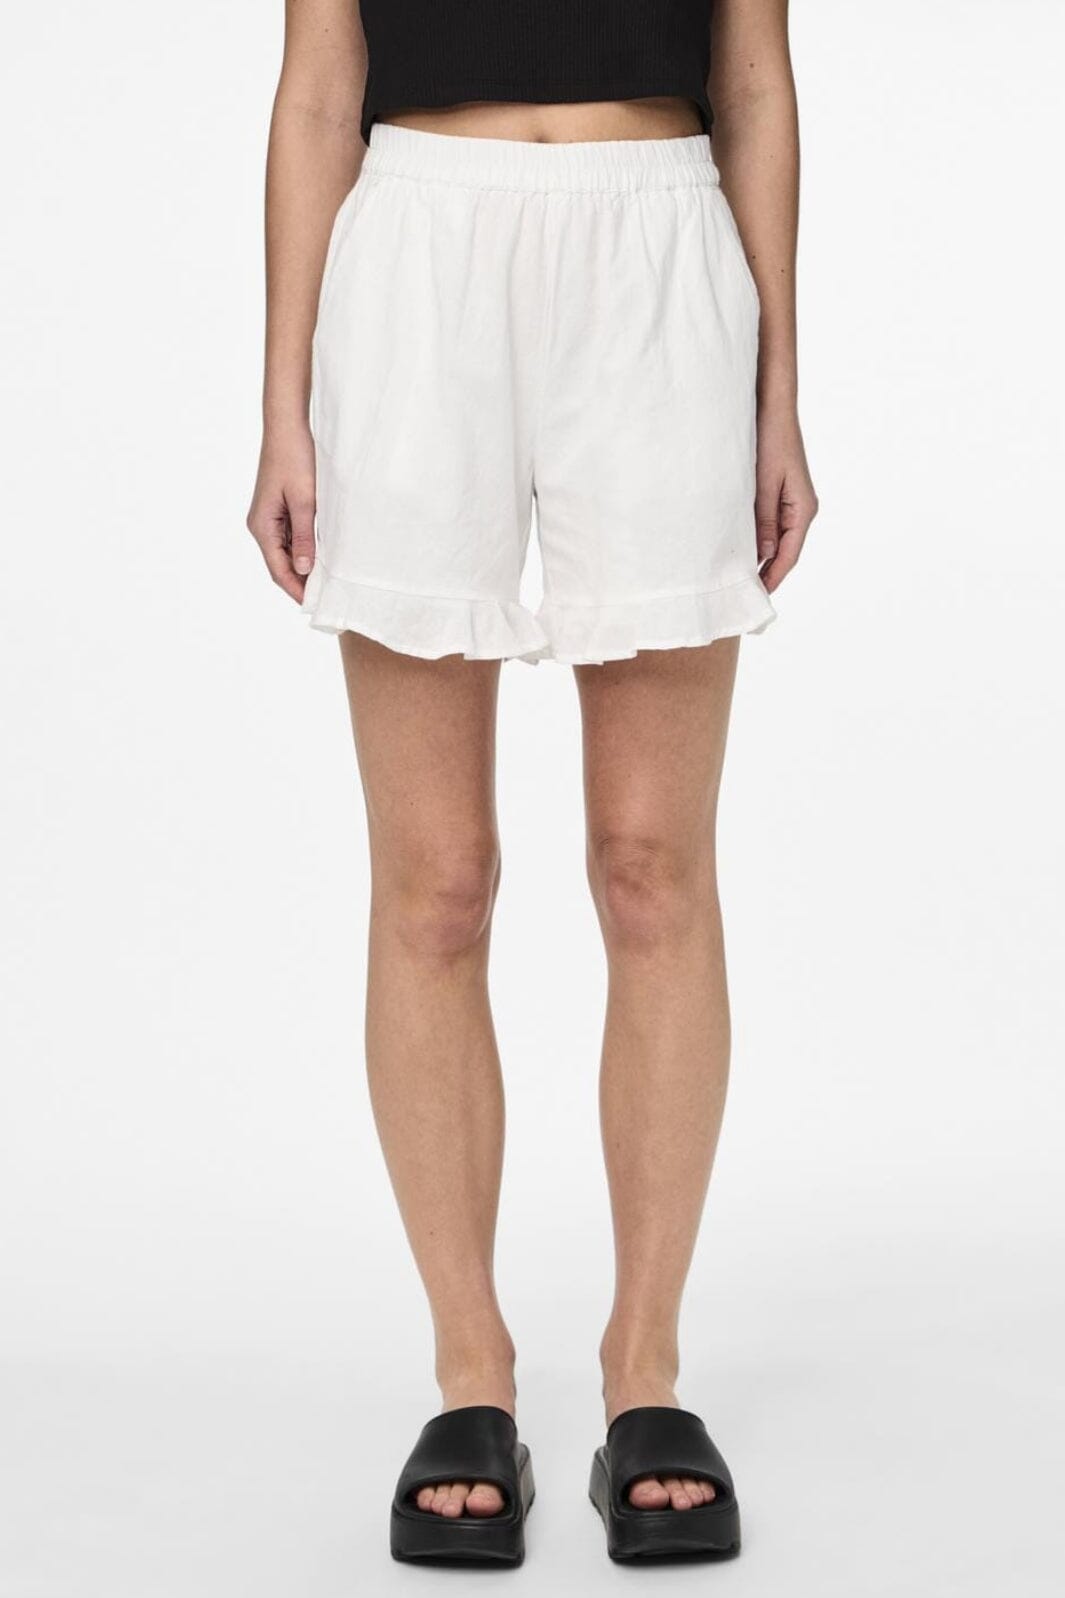 Pieces - Pcmilla Shorts - 4369877 Bright White Shorts 